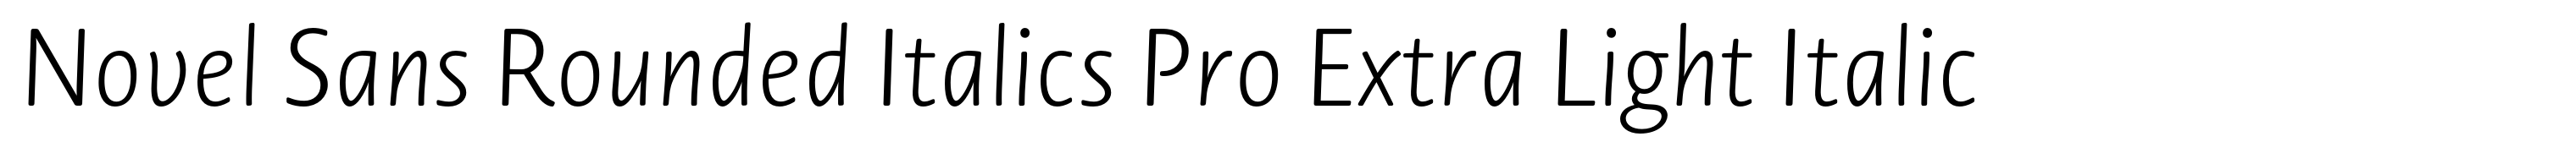 Novel Sans Rounded Italics Pro Extra Light Italic